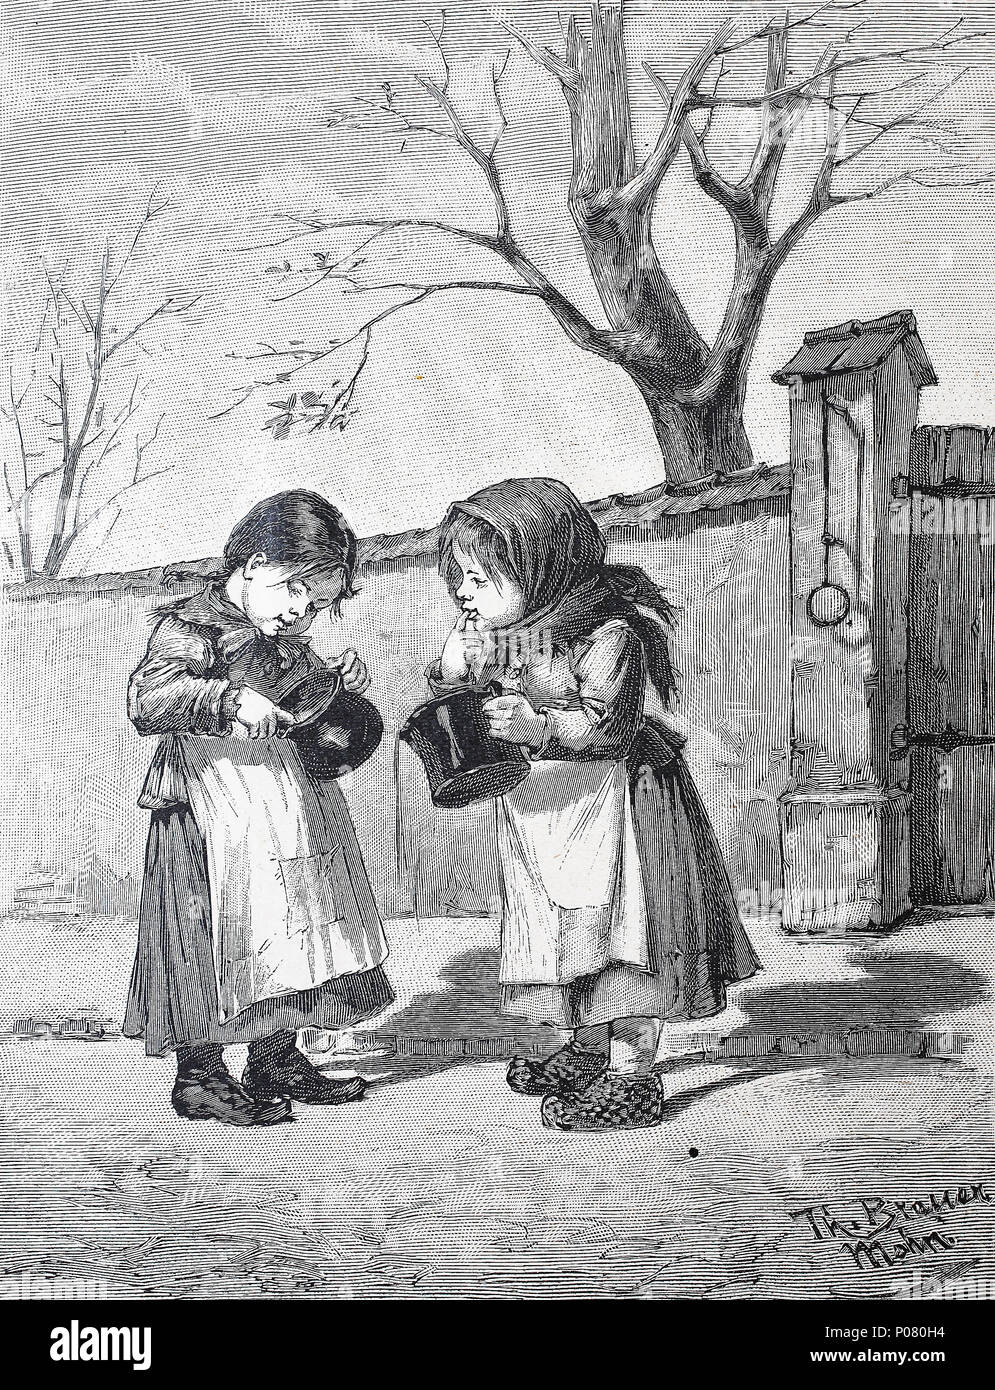 children licking cooking pots, Kinder beim Auslecken von Kochtöpfen, digital improved reproduction of an original print from the year 1881 Stock Photo